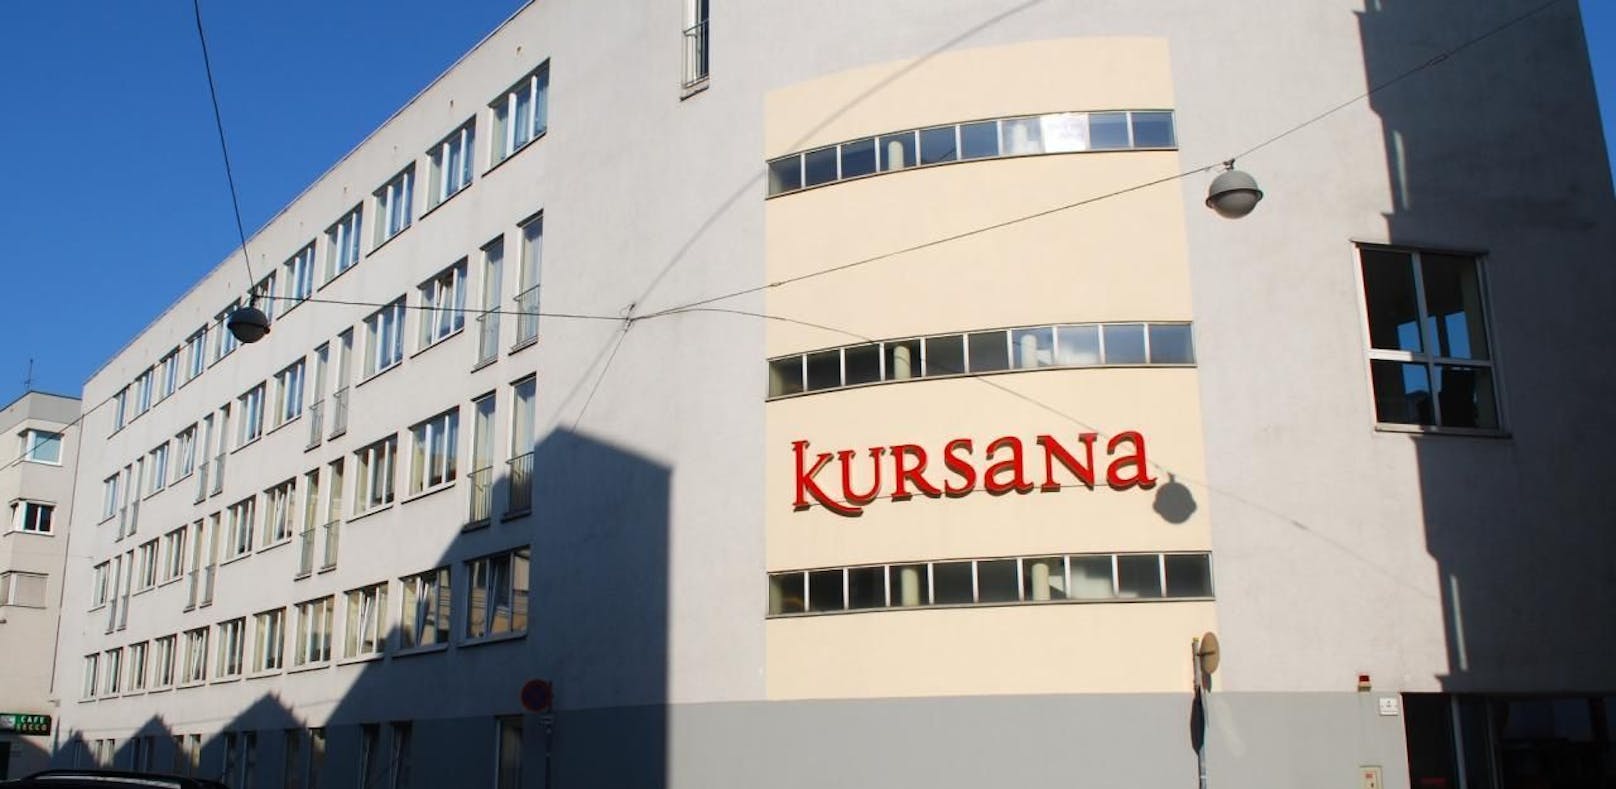 Die Seniorenresidenz Kursana sperrt Ende März zu.